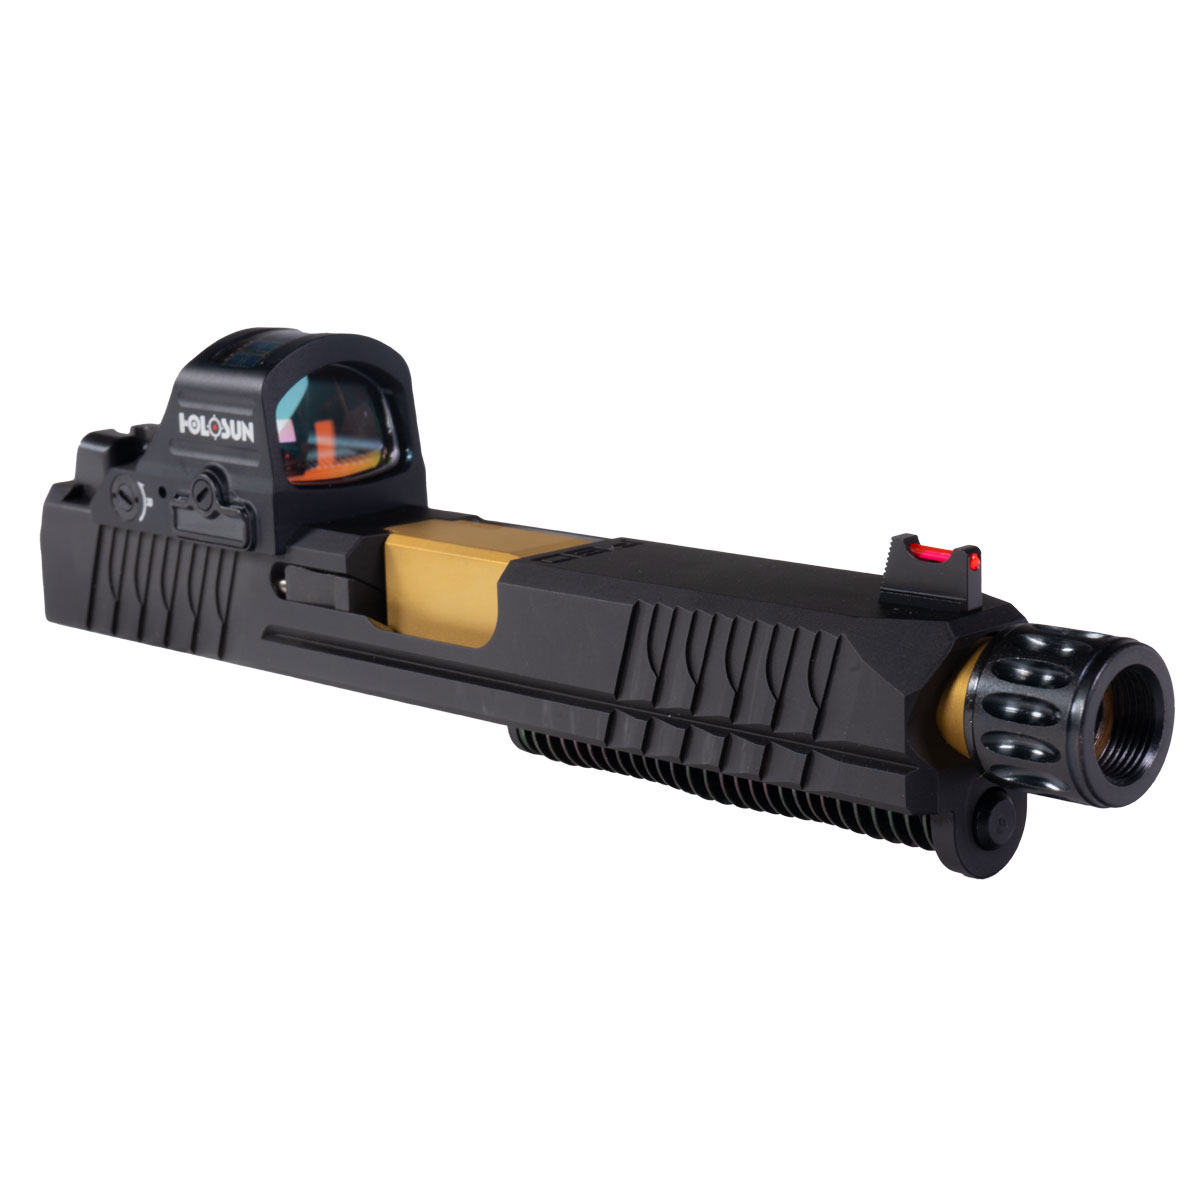 MMC 'Fiat Lux w/ HS507C-X2 Red Dot' 9mm Complete Slide Kit - Glock 19 Gen 1-3 Compatible